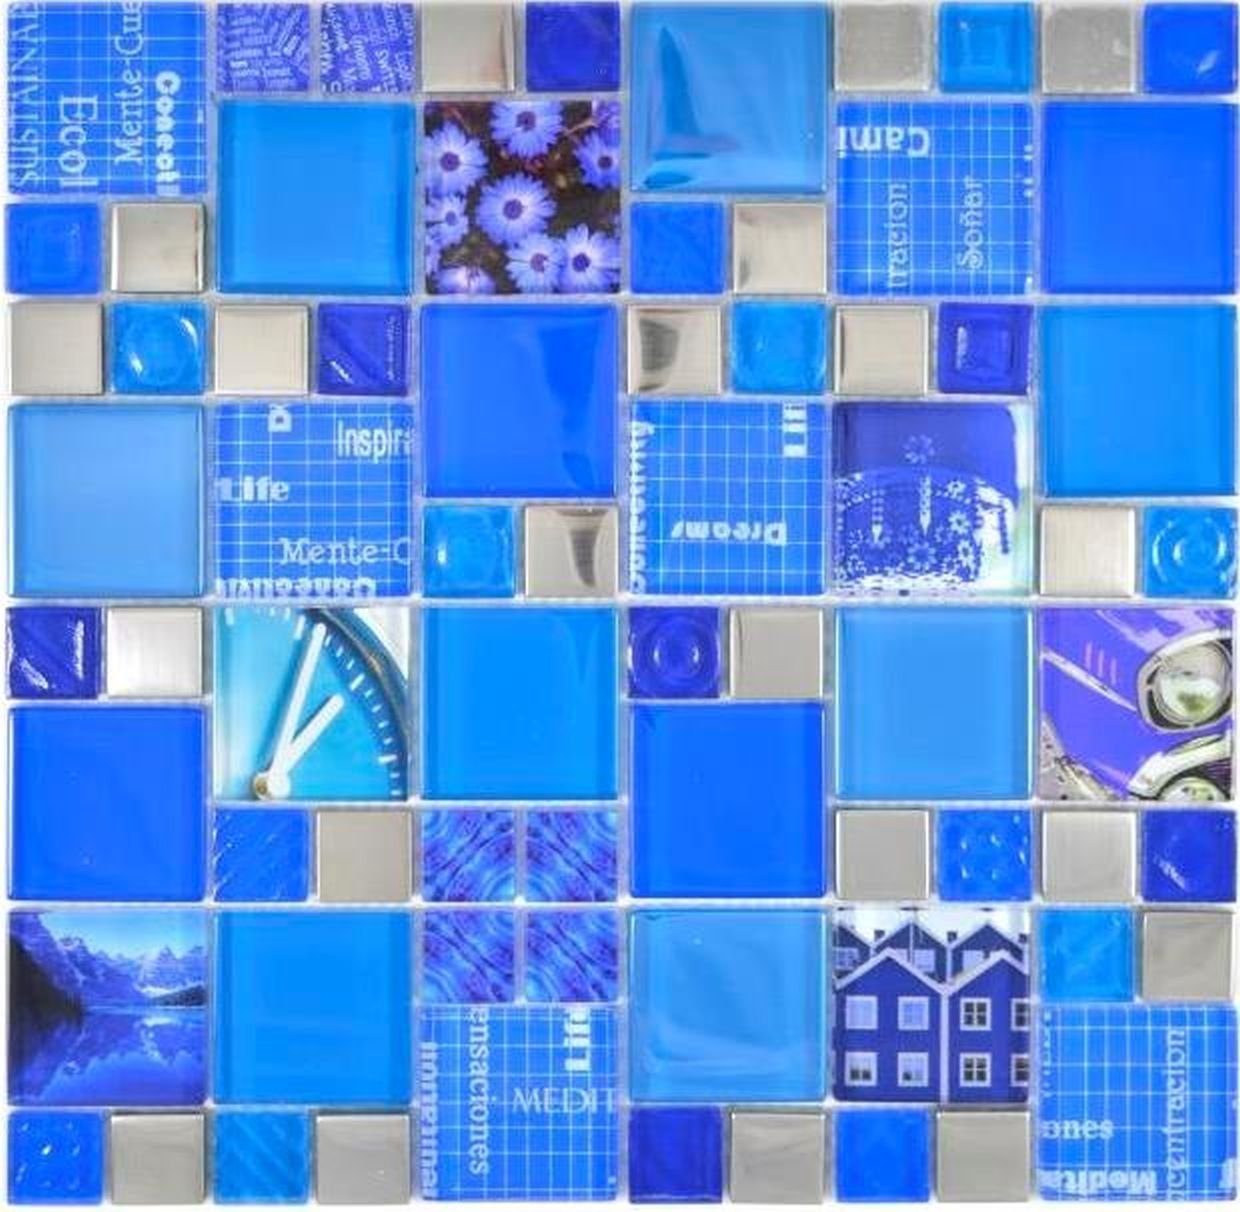 Mosani Mosaikfliesen